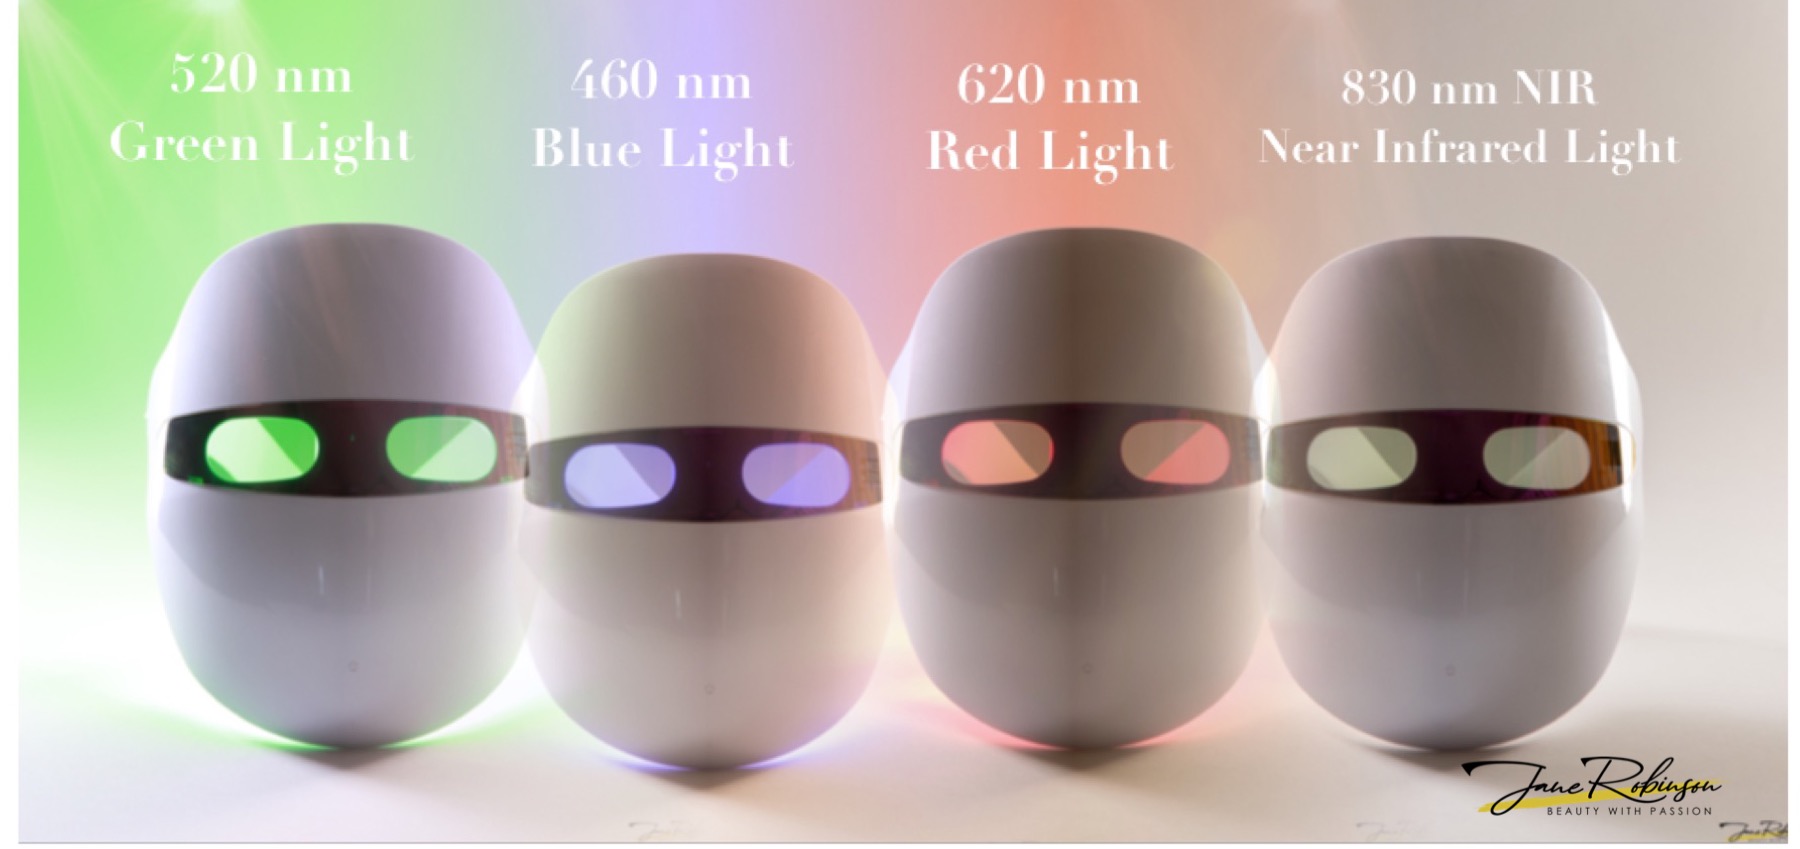 [JANE ROBINSON] LED Light Therapy Mask